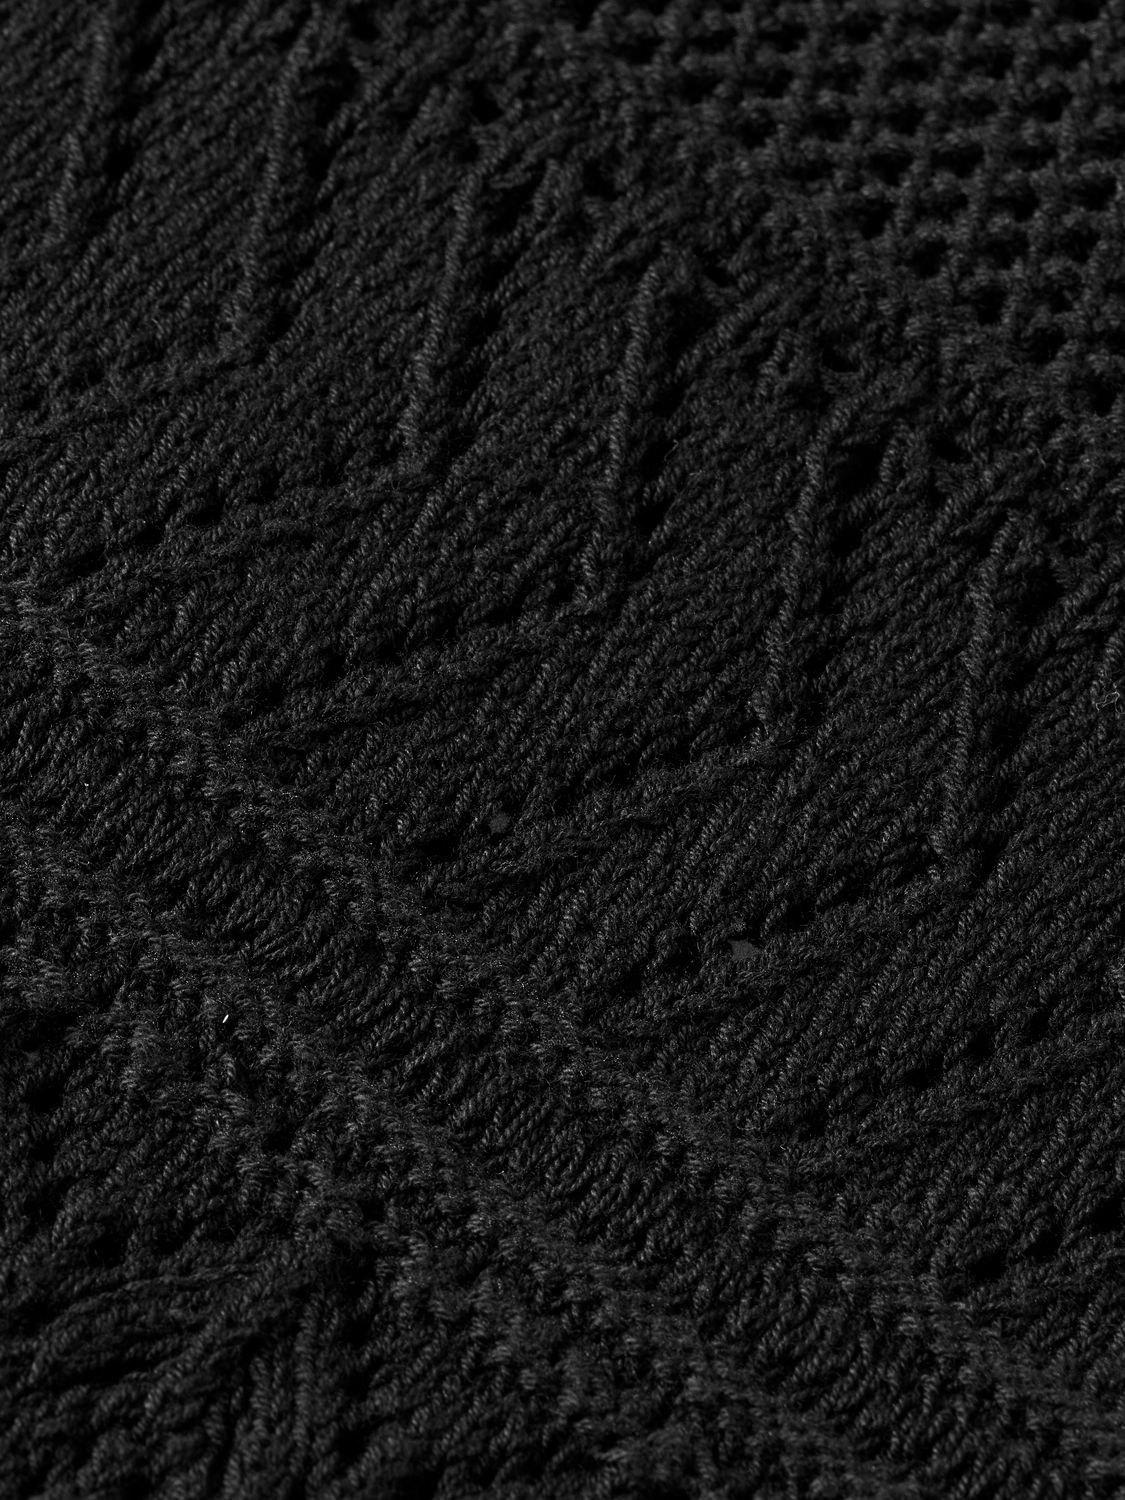 Pointelle Stitch Knit Dress With Fringing | Black |/Medium | Scotch & Soda